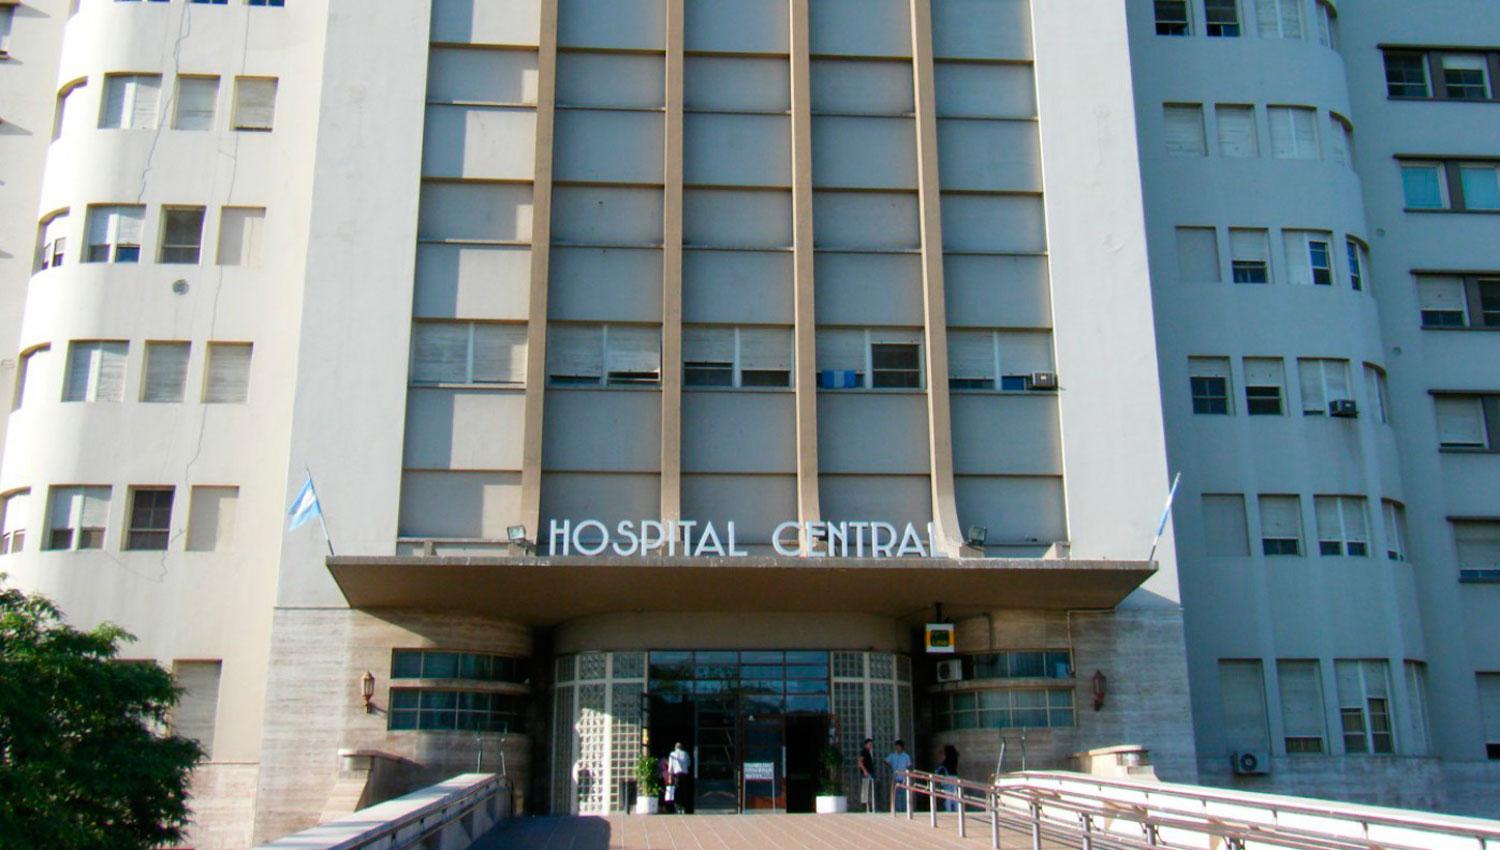 HOSPITAL DE MENDOZA. FOTO TOMADA DE MENDOZAPOST.COM